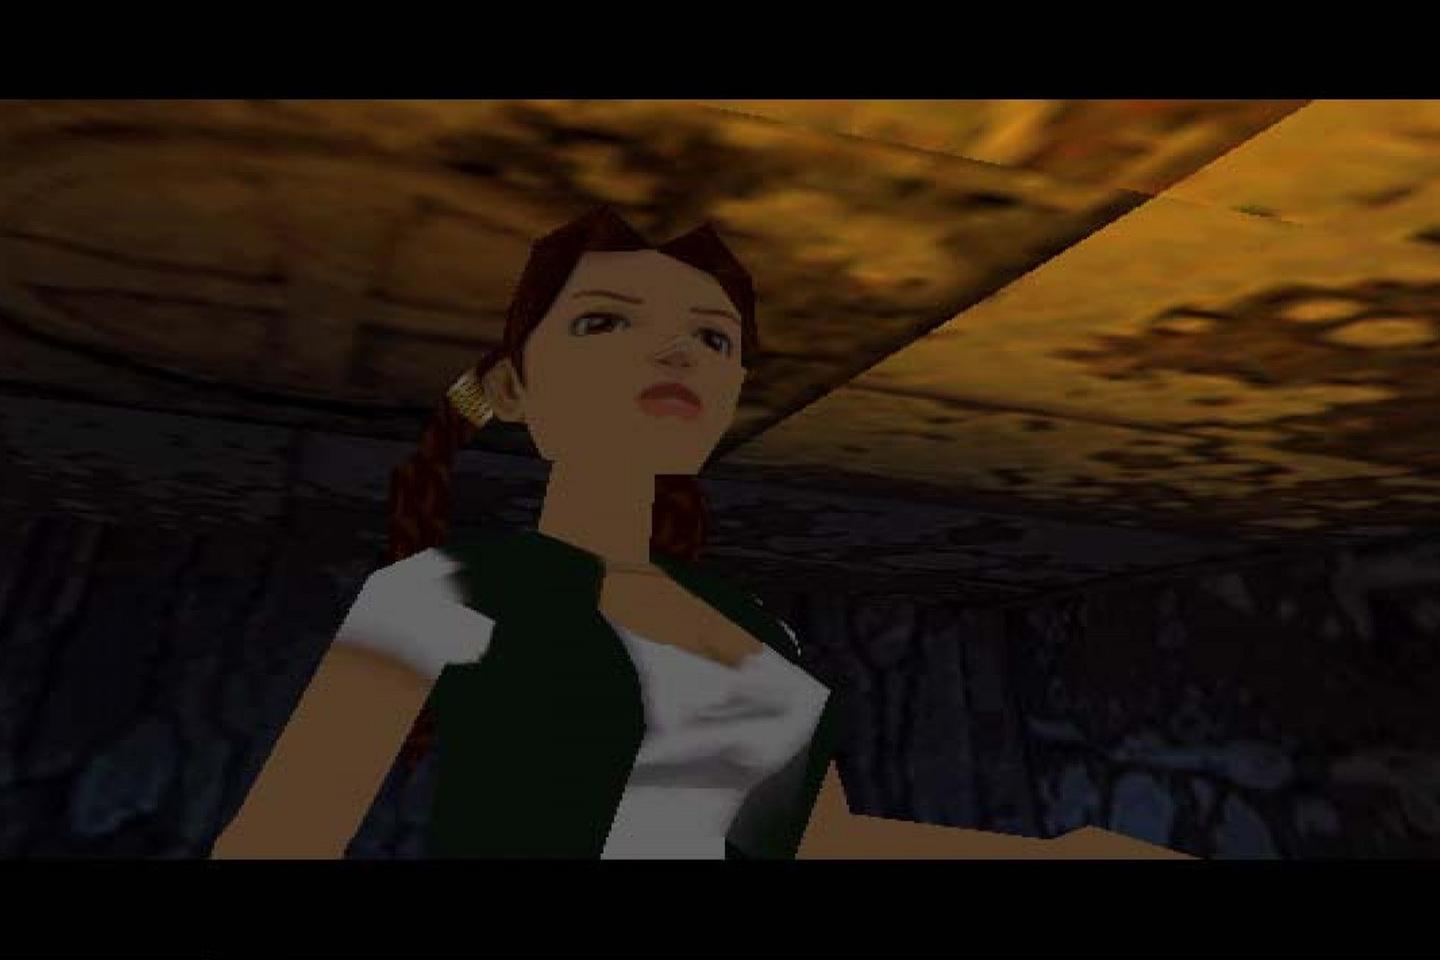 Lara wearing white shirt and green vest.